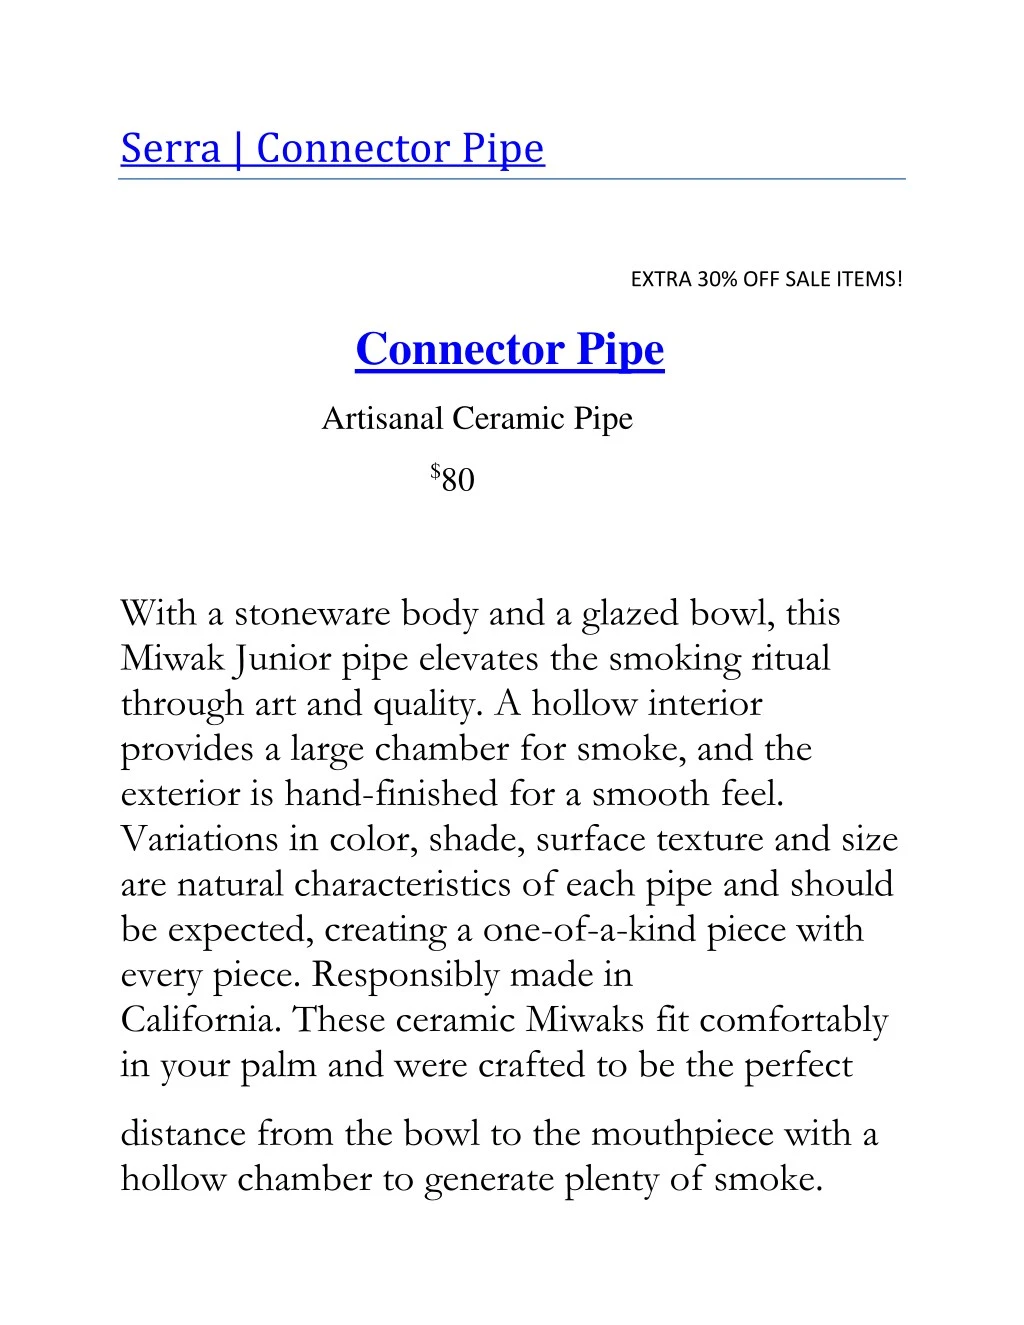 serra connector pipe